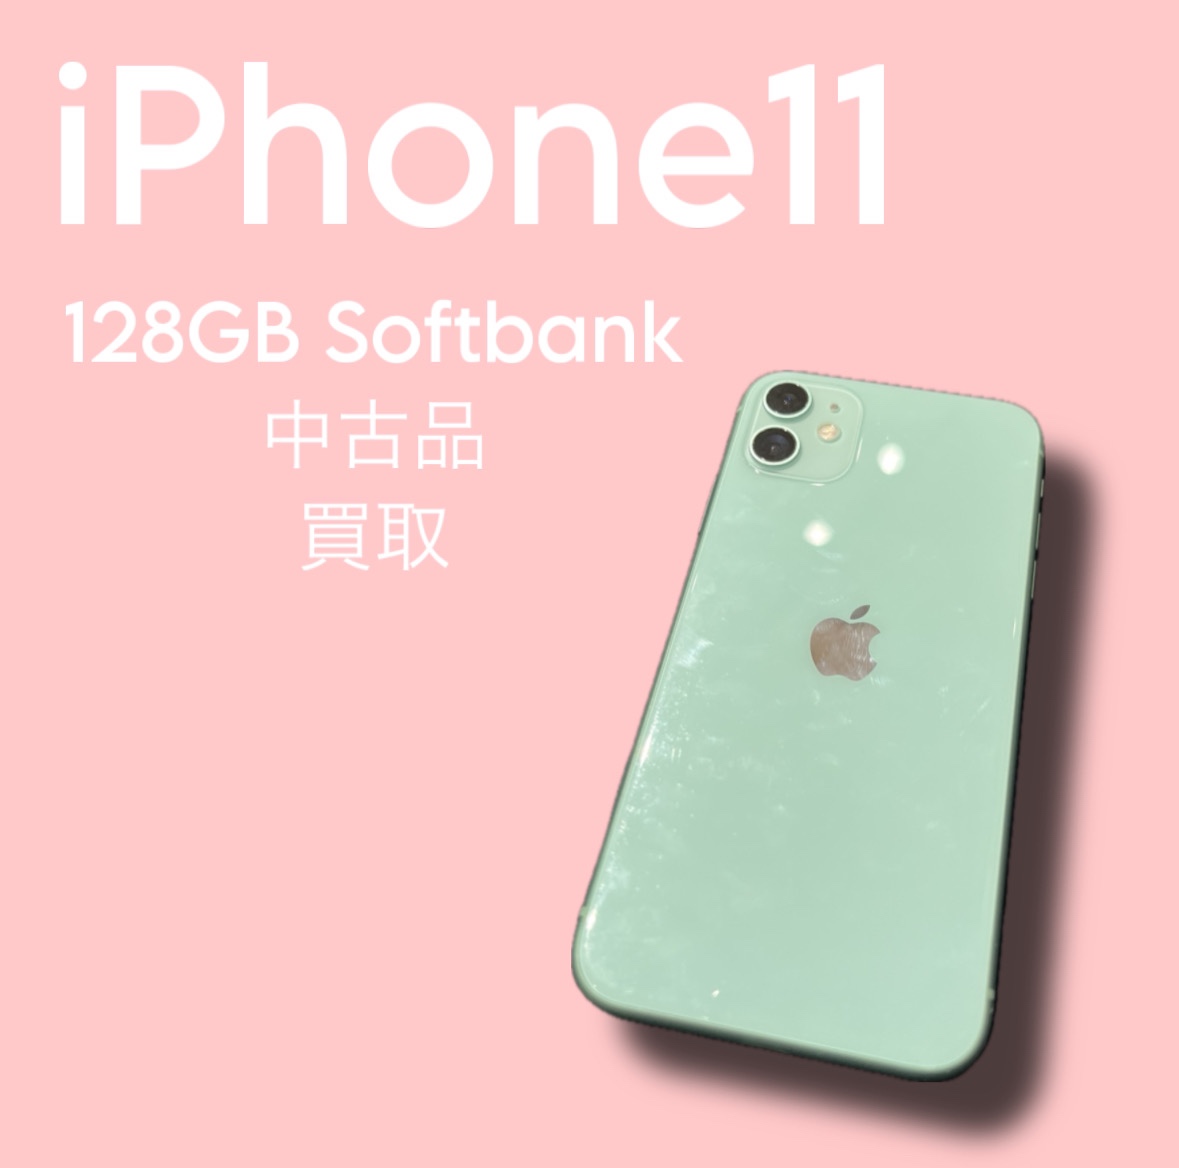 iPhone11・128GB・Softbank・ネット制限〇【天神地下街店】